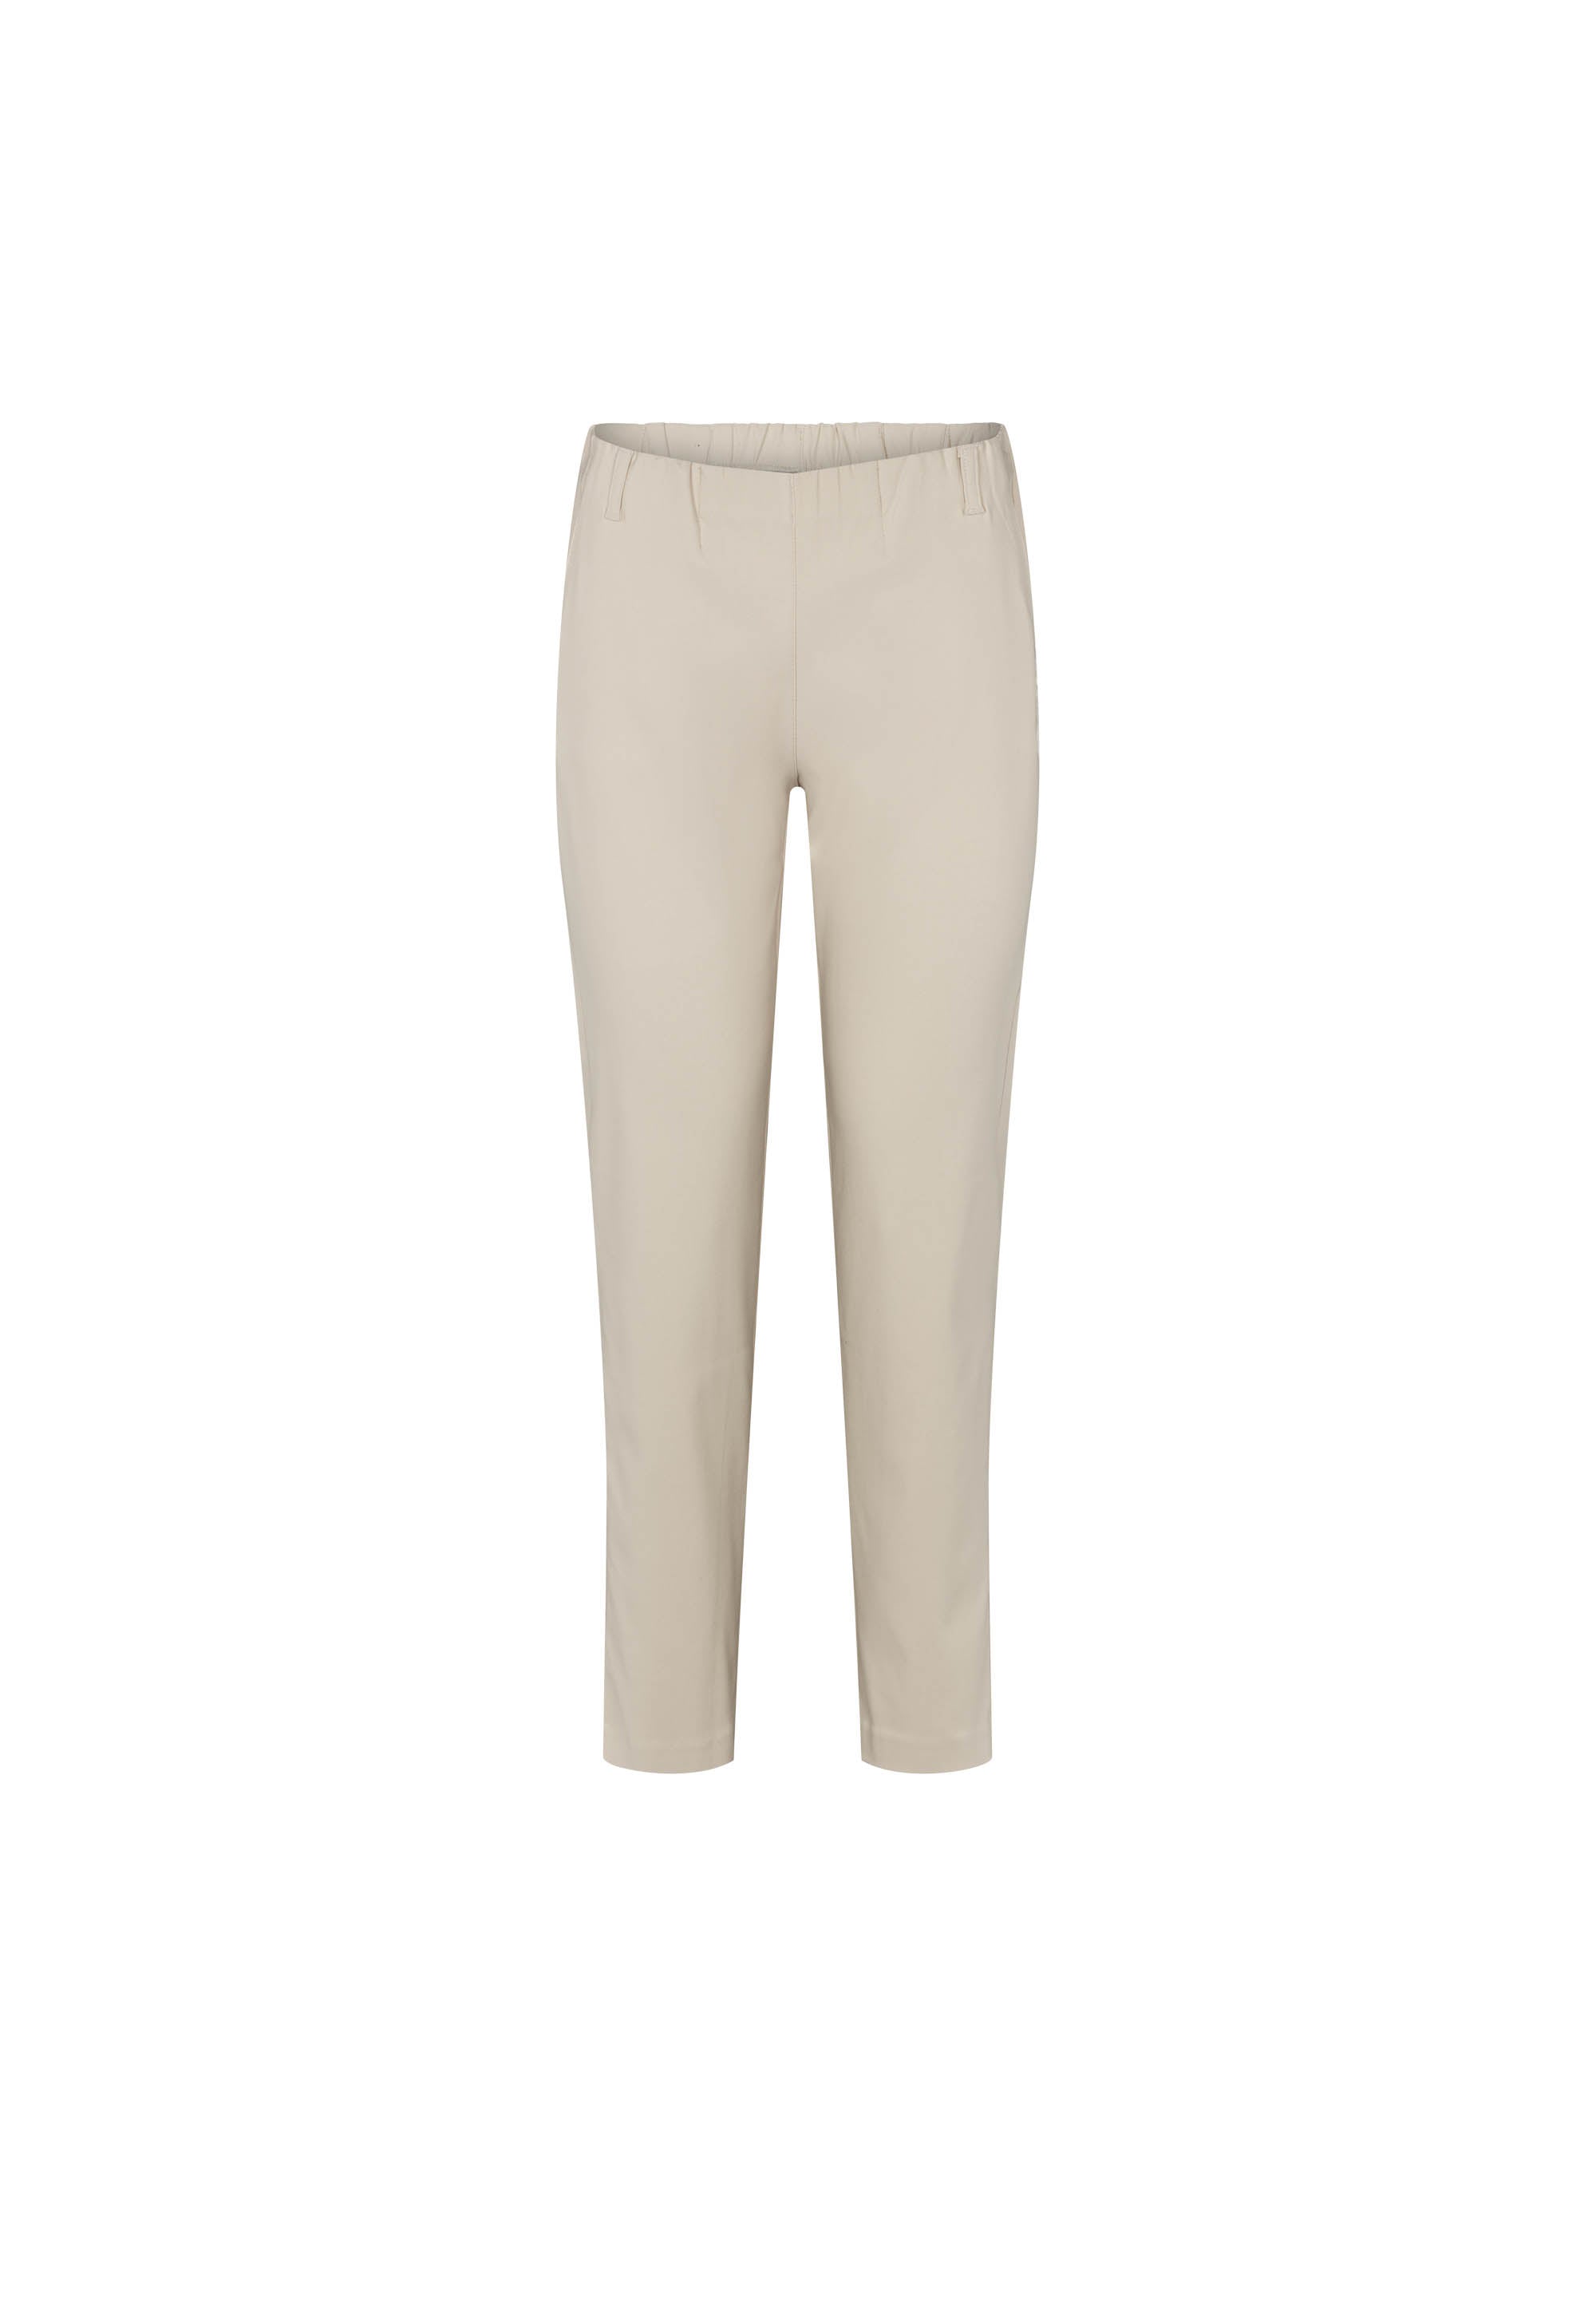 LAURIE  Taylor Regular - Short Length Trousers REGULAR Grau sand